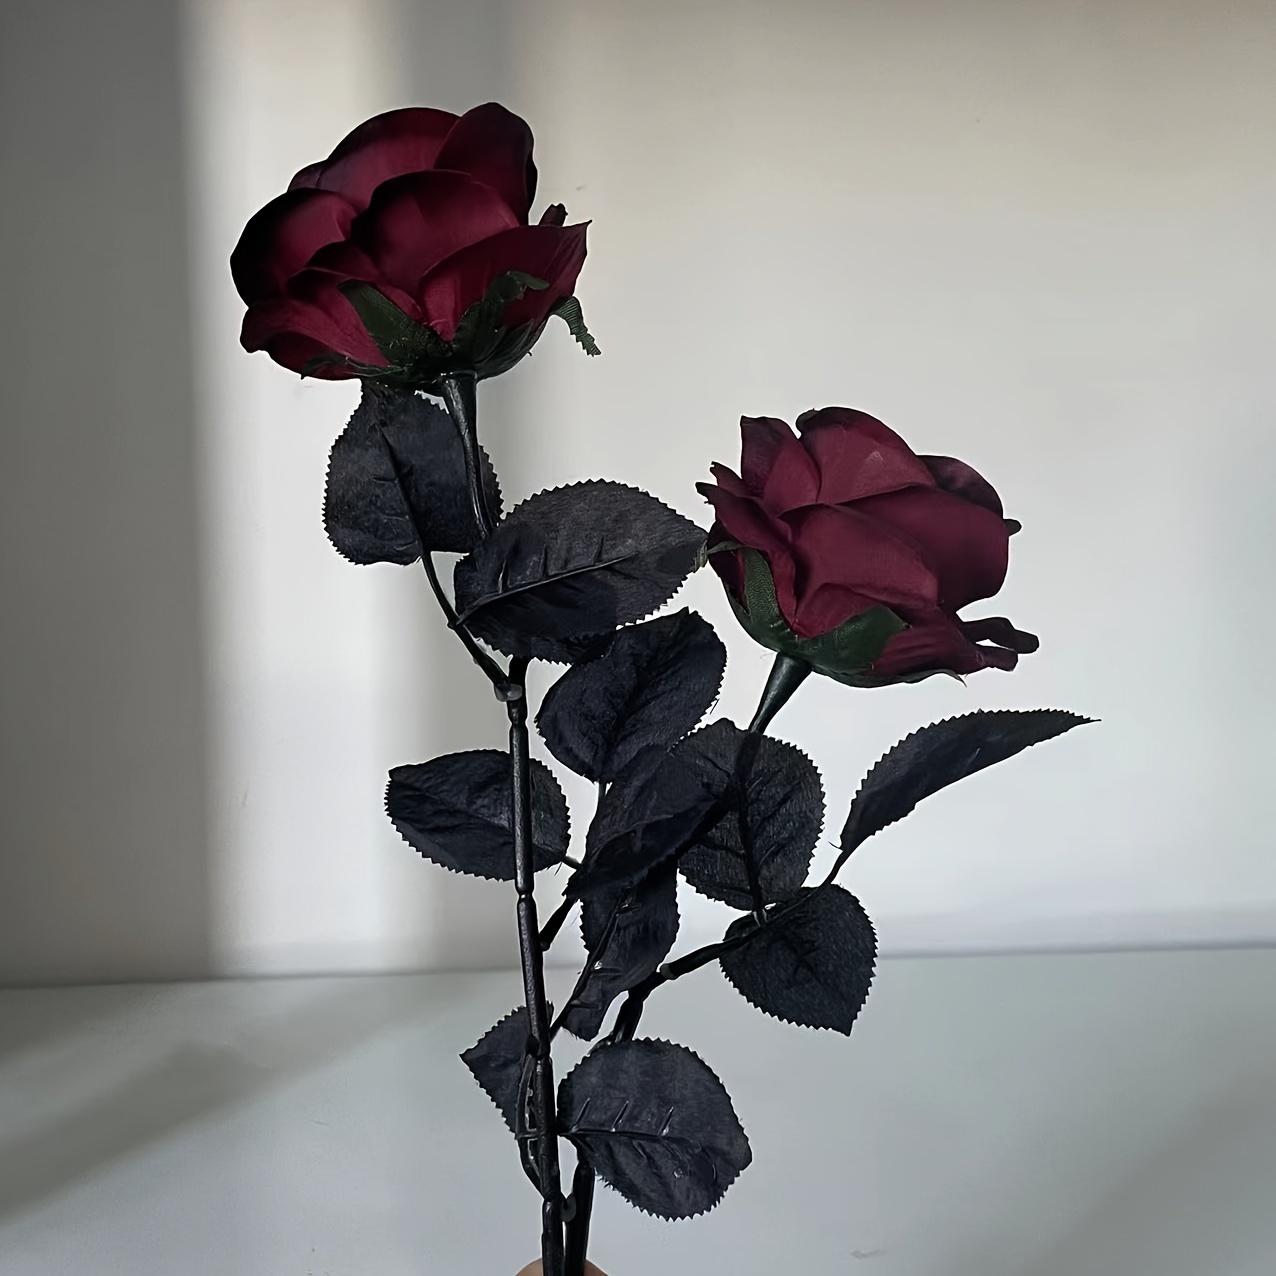 1 pc 50cm Black Rose Artificial Flower Single Branch Flower Home